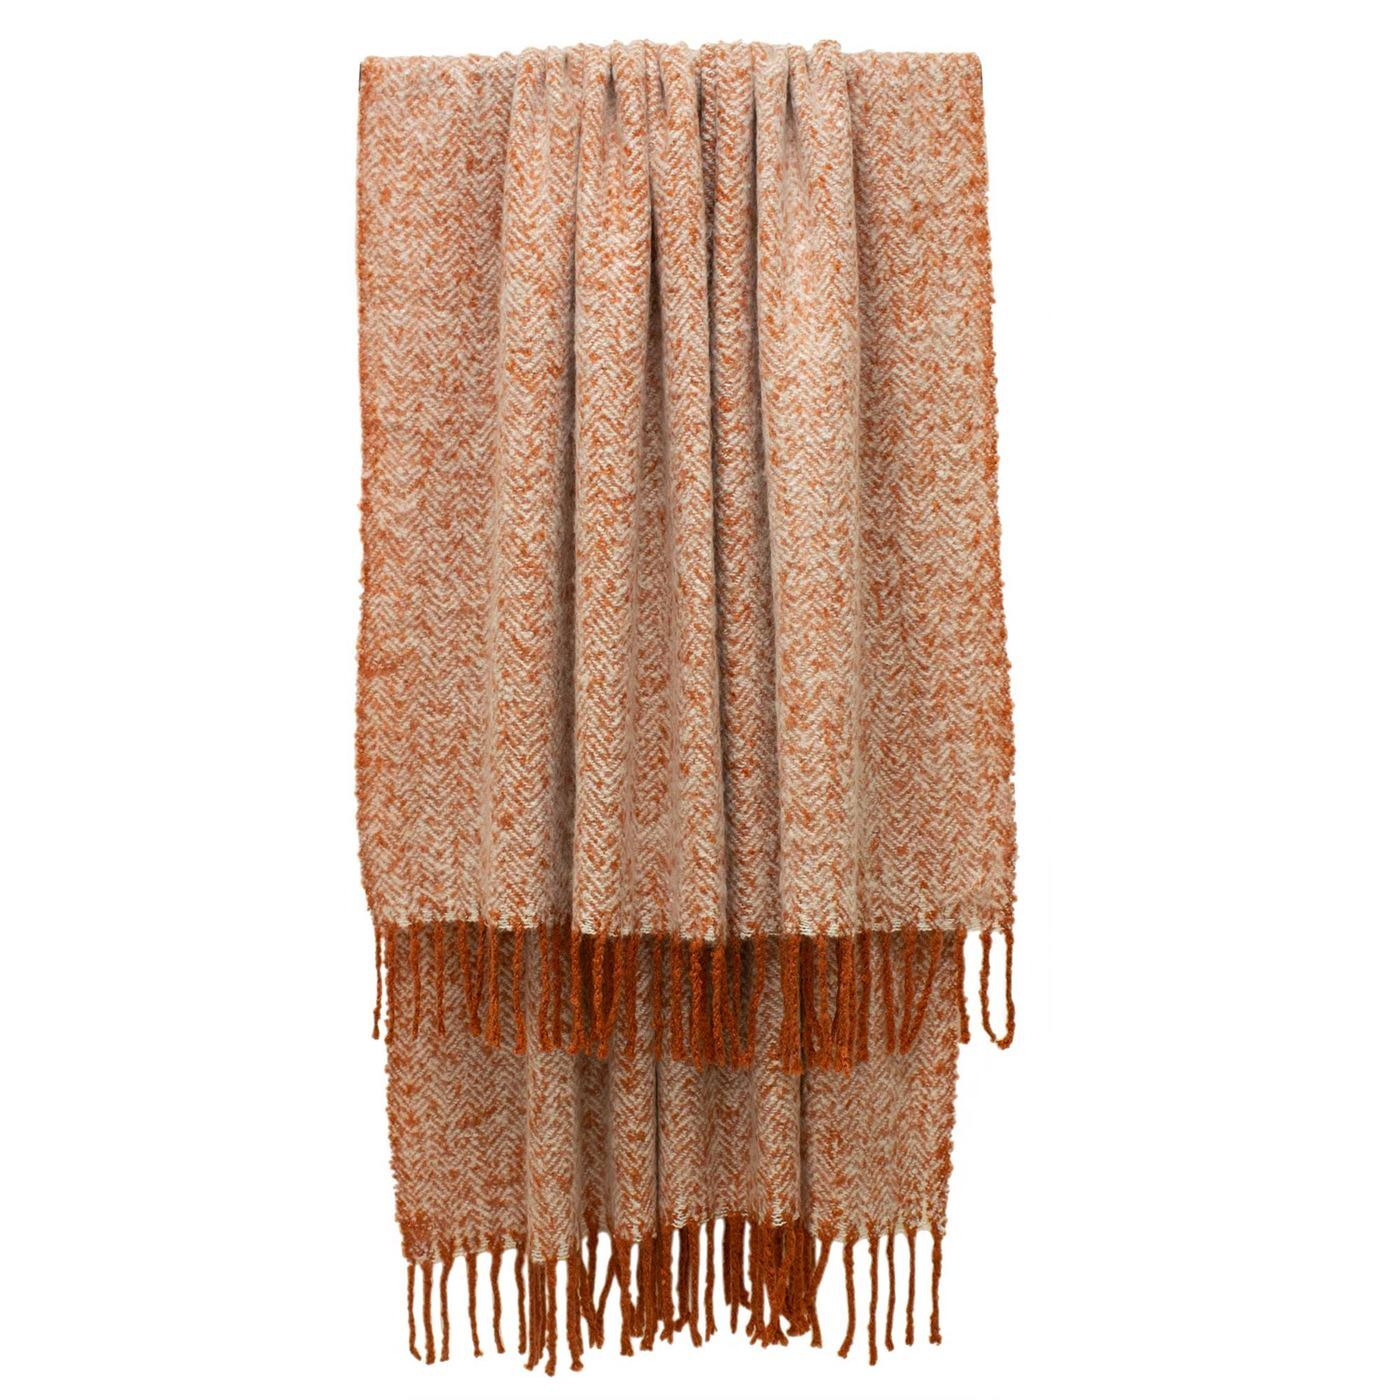 Soft Rust Throw Blanket, Orange Fabric - Barker & Stonehouse - image 1